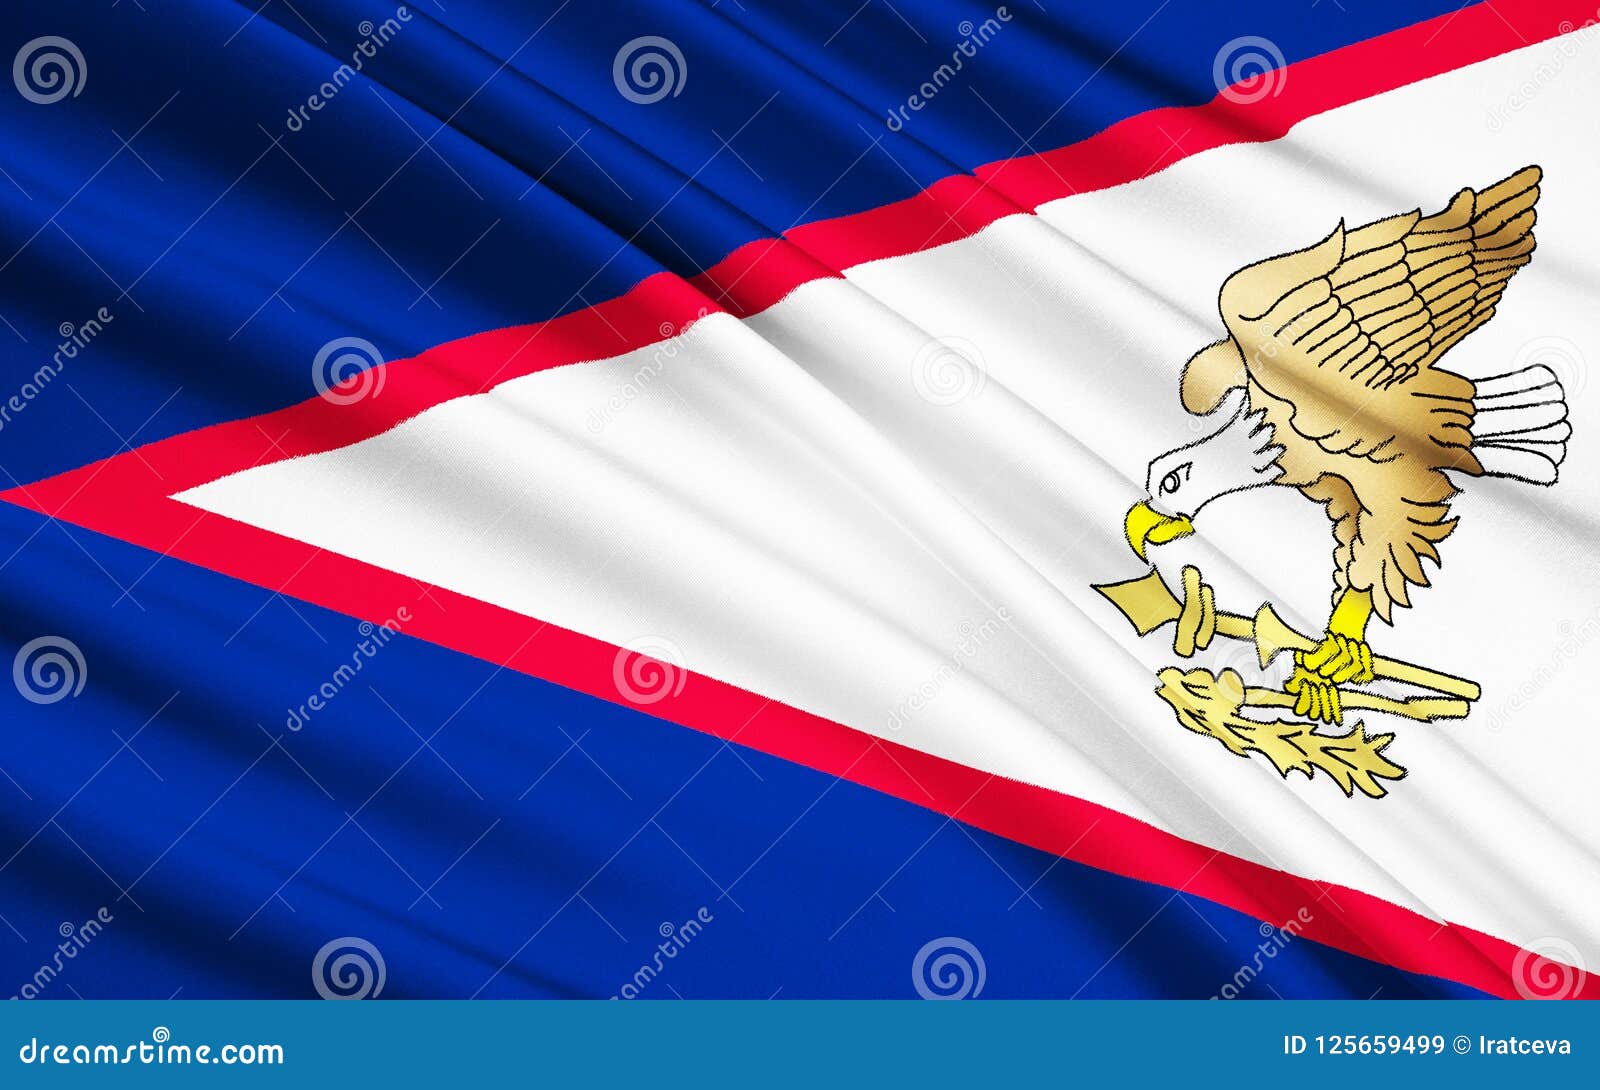 flag of isla de pascua chile, hanga roa - polynesia